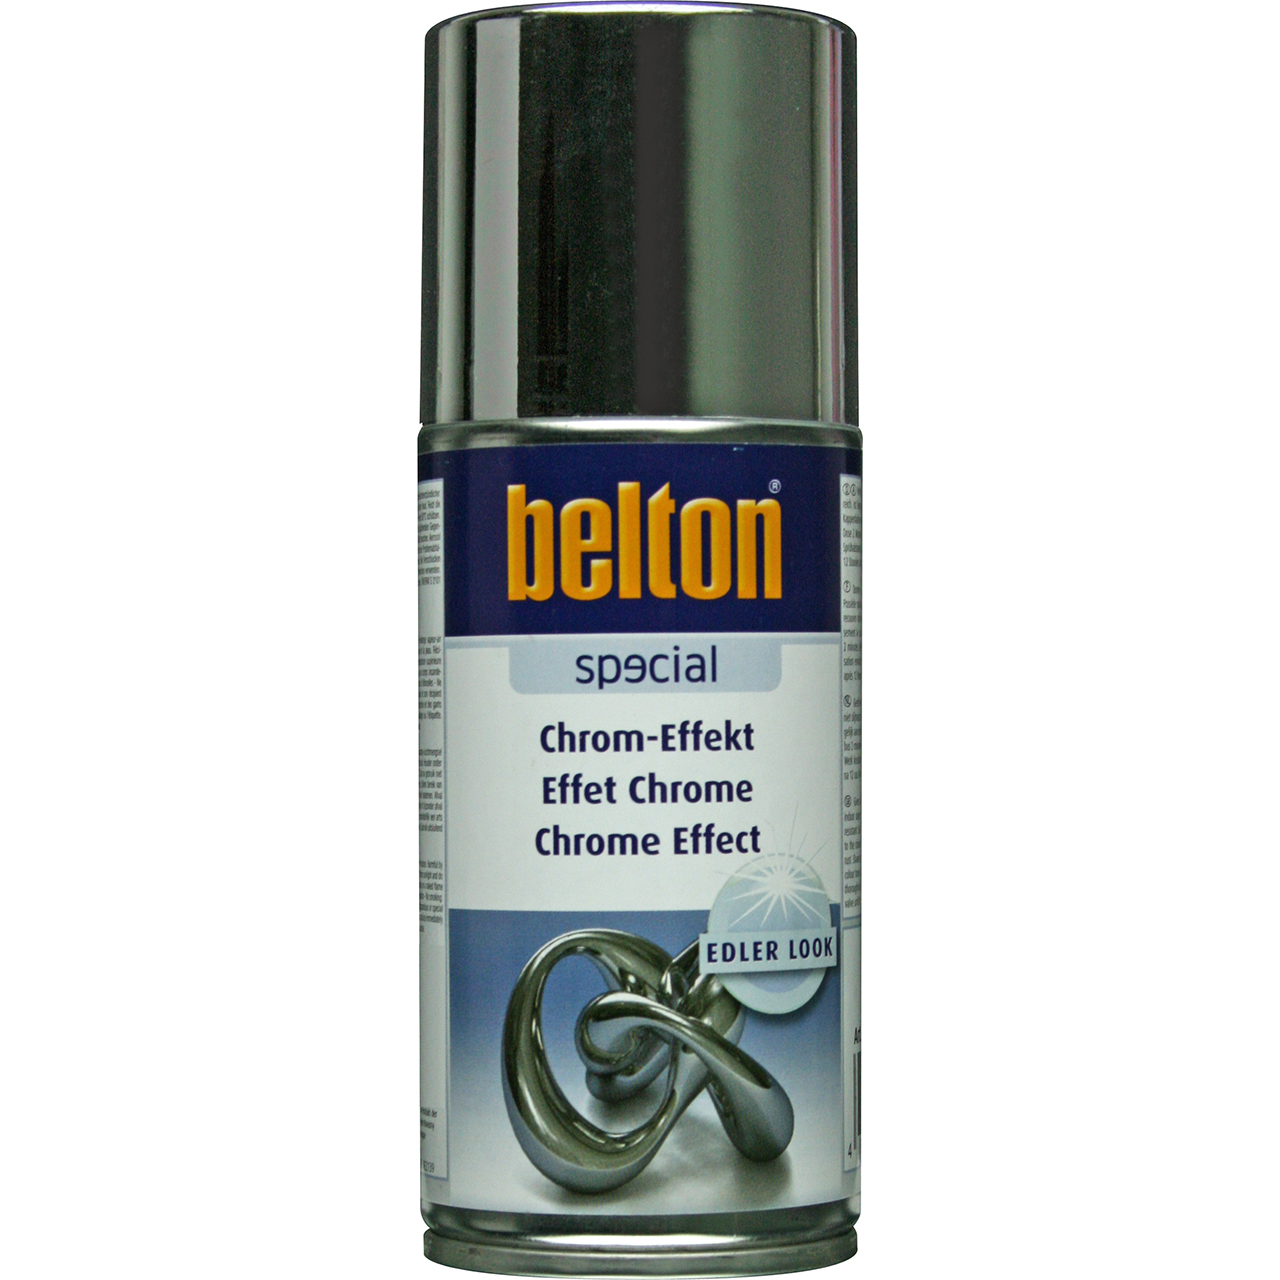 belton Special Chrom-Effekt, 150ml